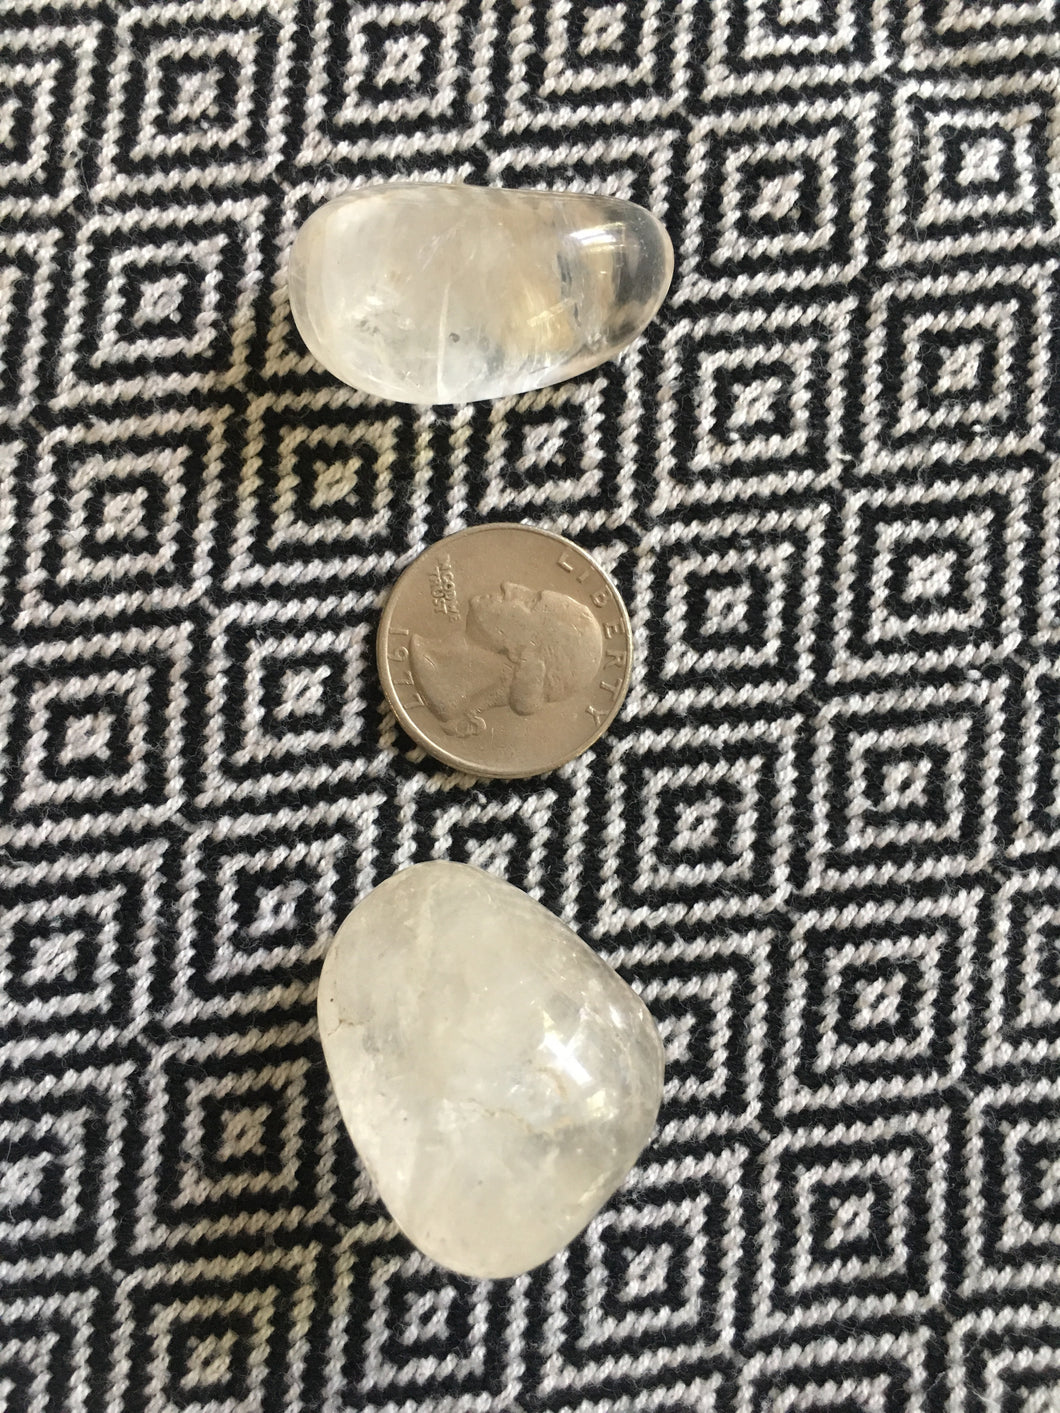 Clear Quartz Tumbled Healing Stone